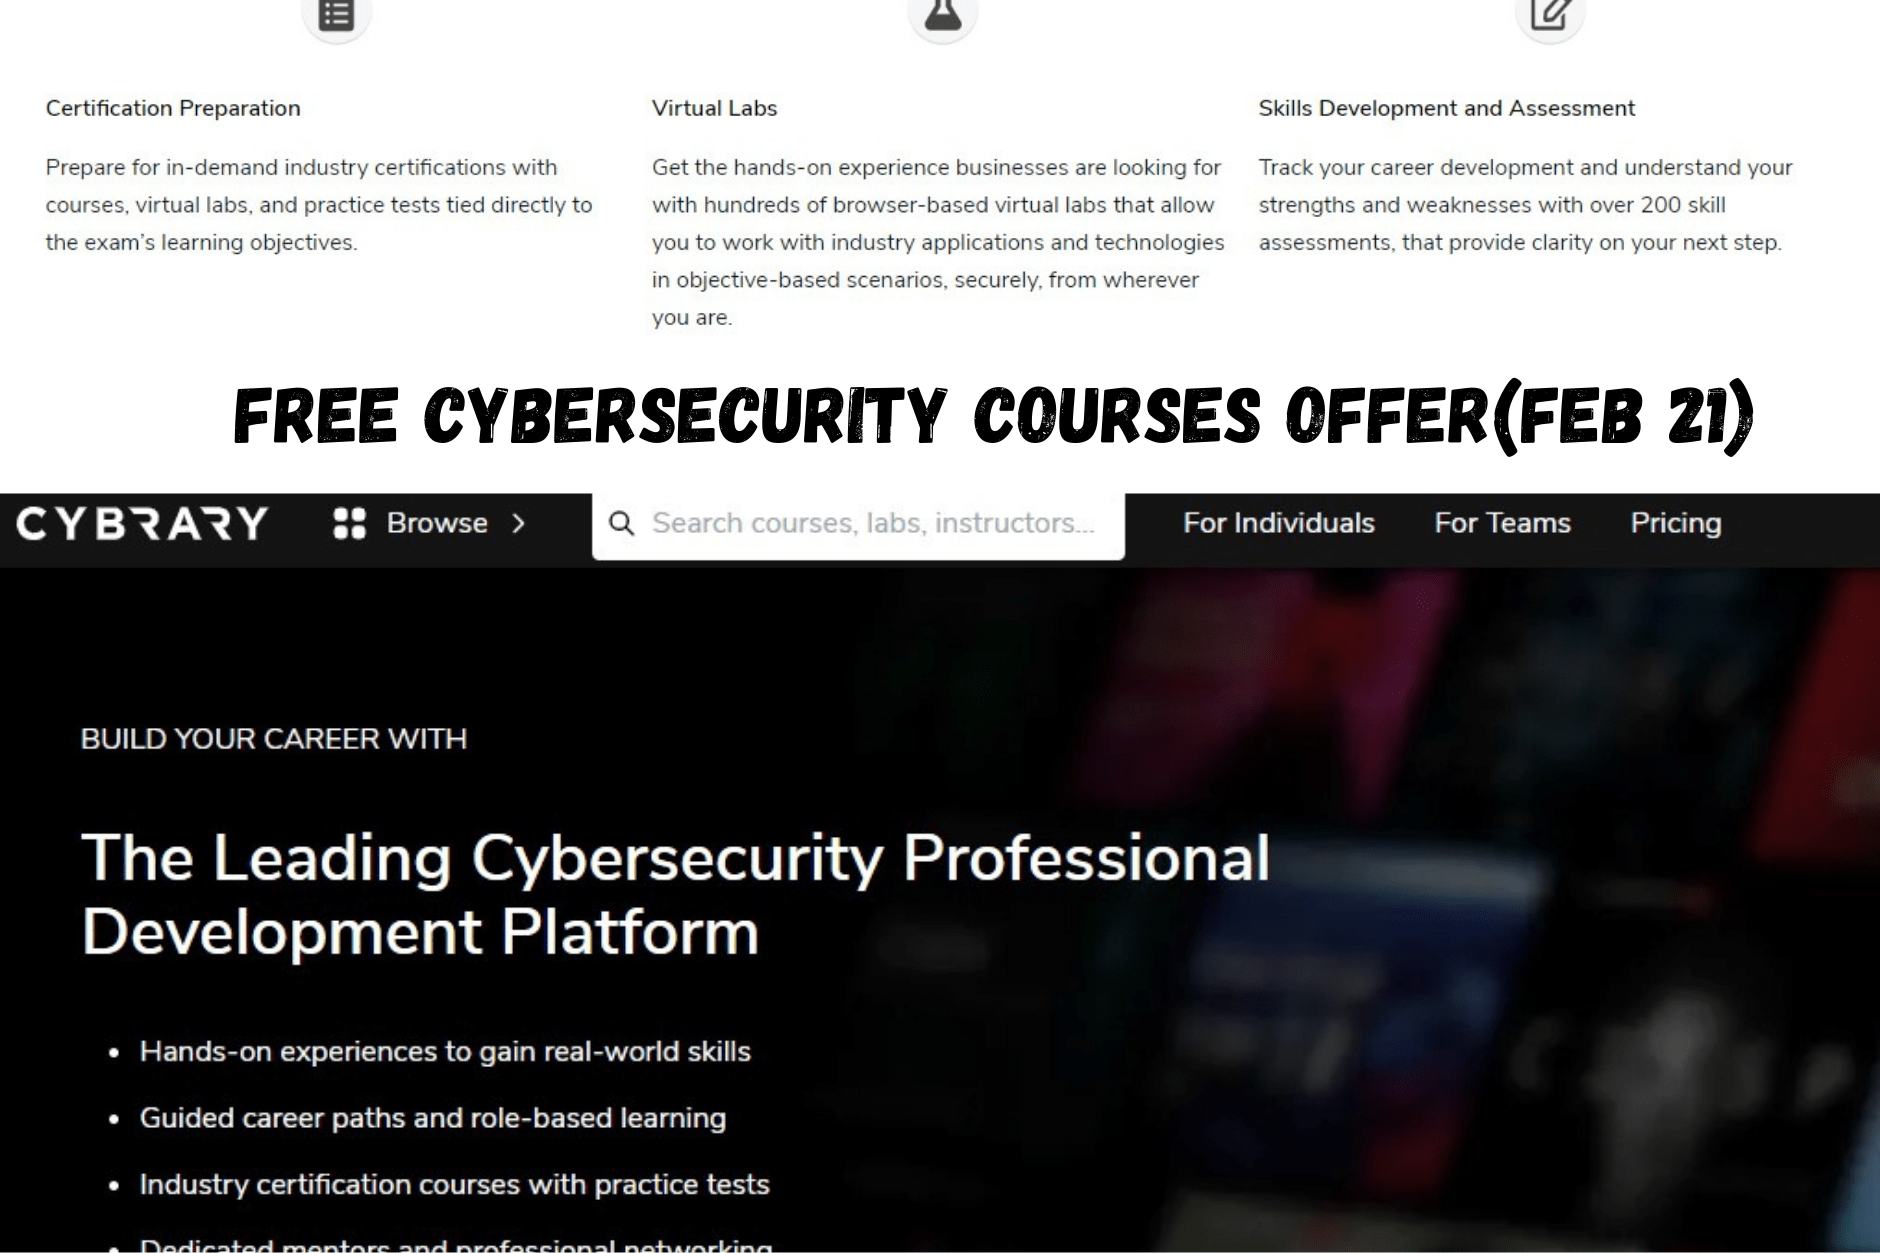 Free Cybersecurity courses offer(Feb 21) CyberRubik